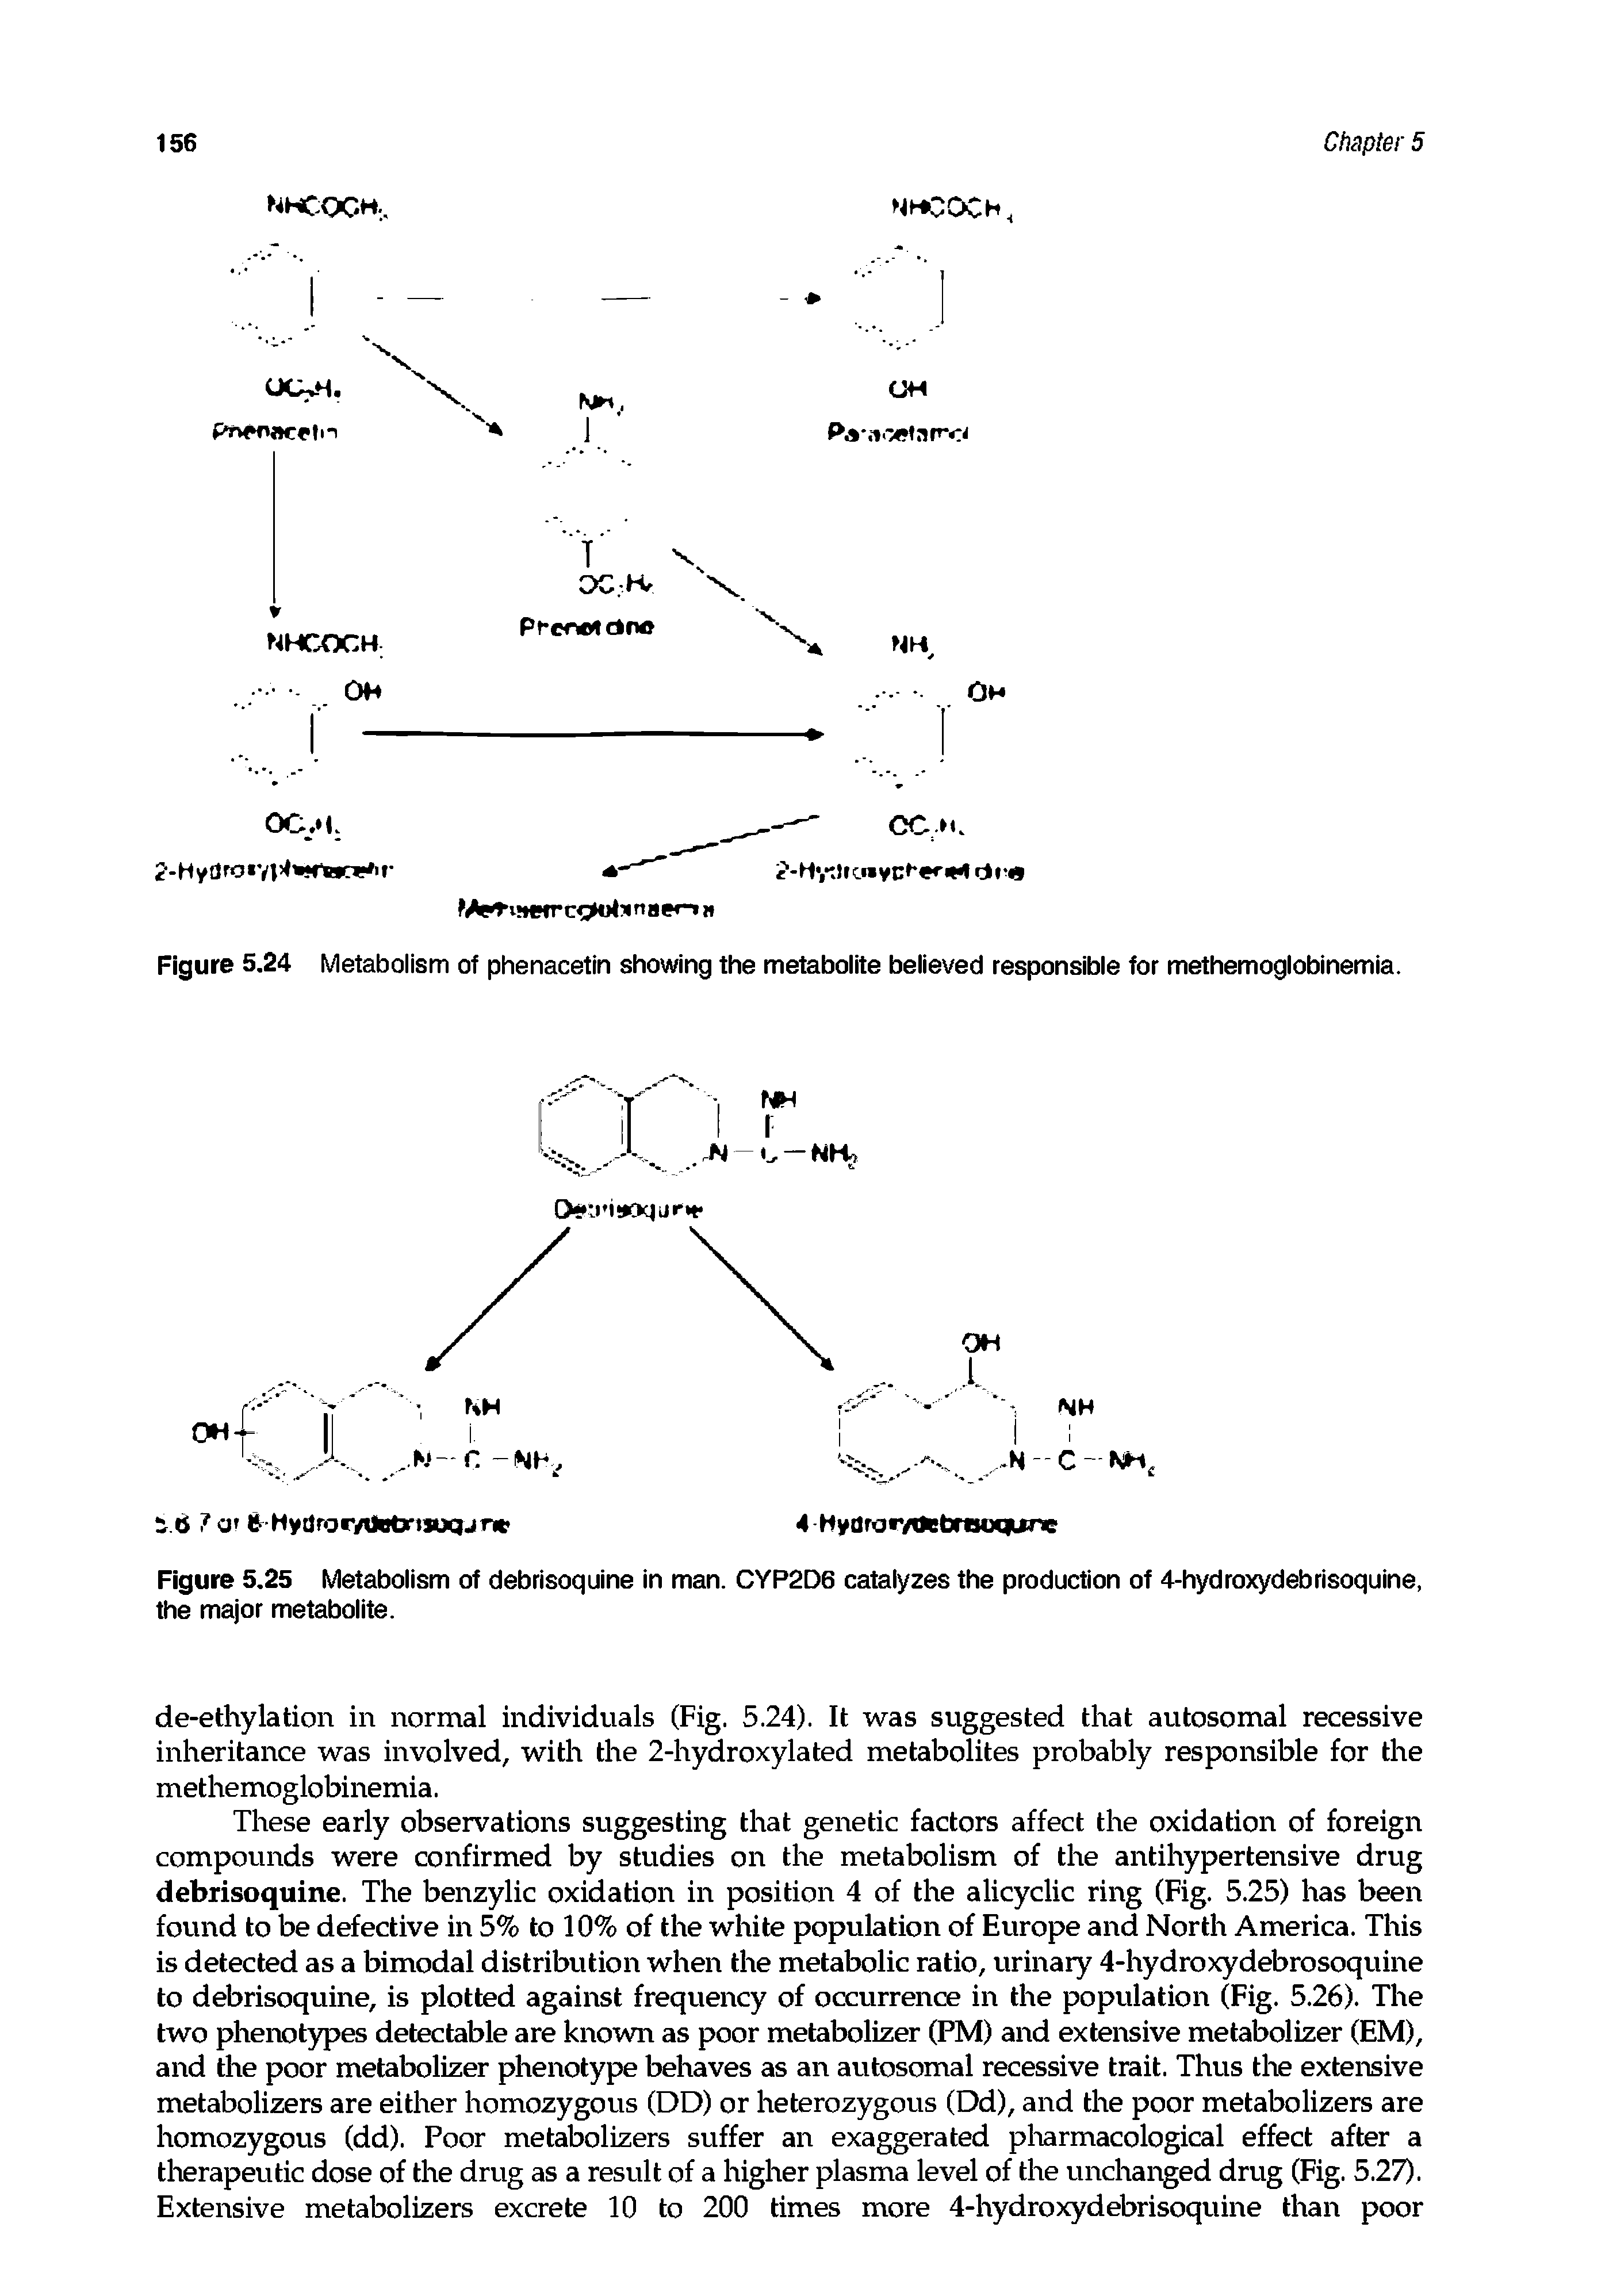 Figure 5.25 Metabolism of debrisoquine in man. CYP2D6 catalyzes the production of 4-hydroxydebrisoquine, the major metabolite.